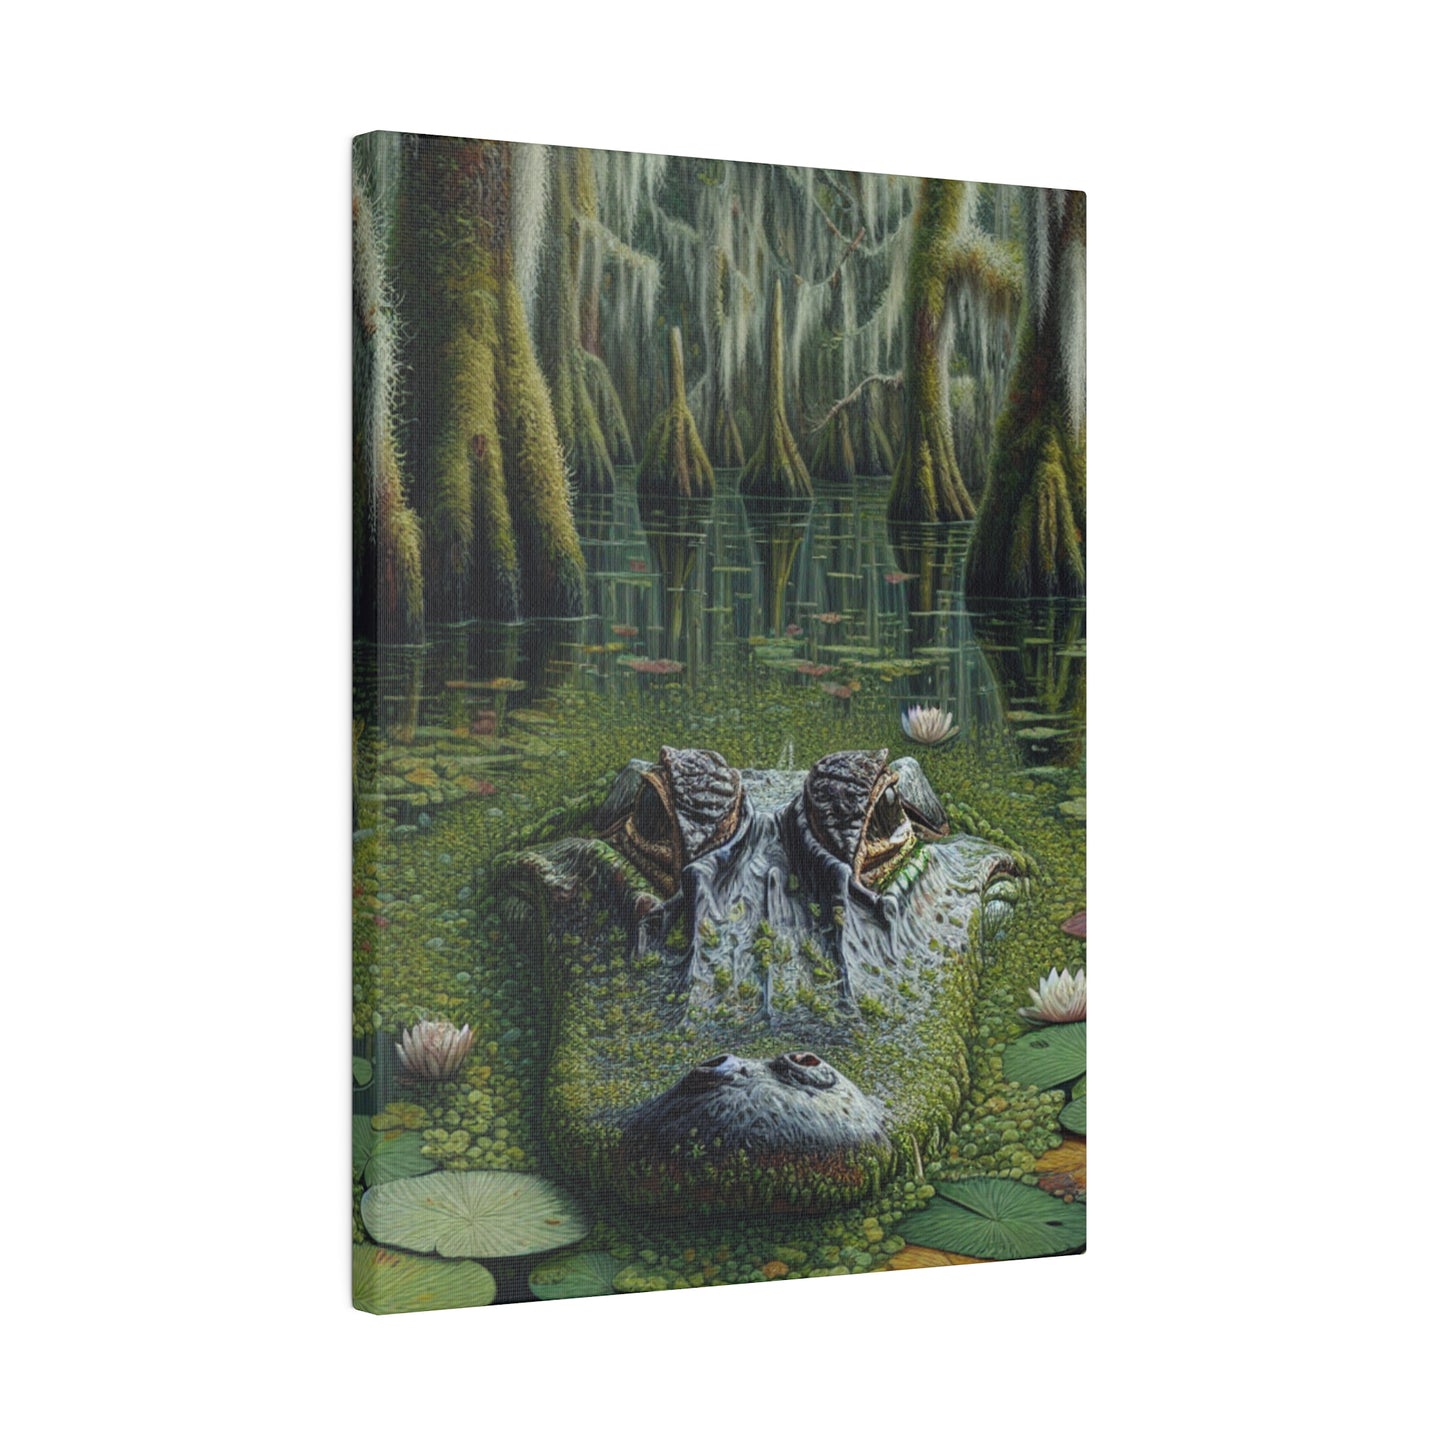 "Allure Alligator - Exotic Canvas Wall Art"